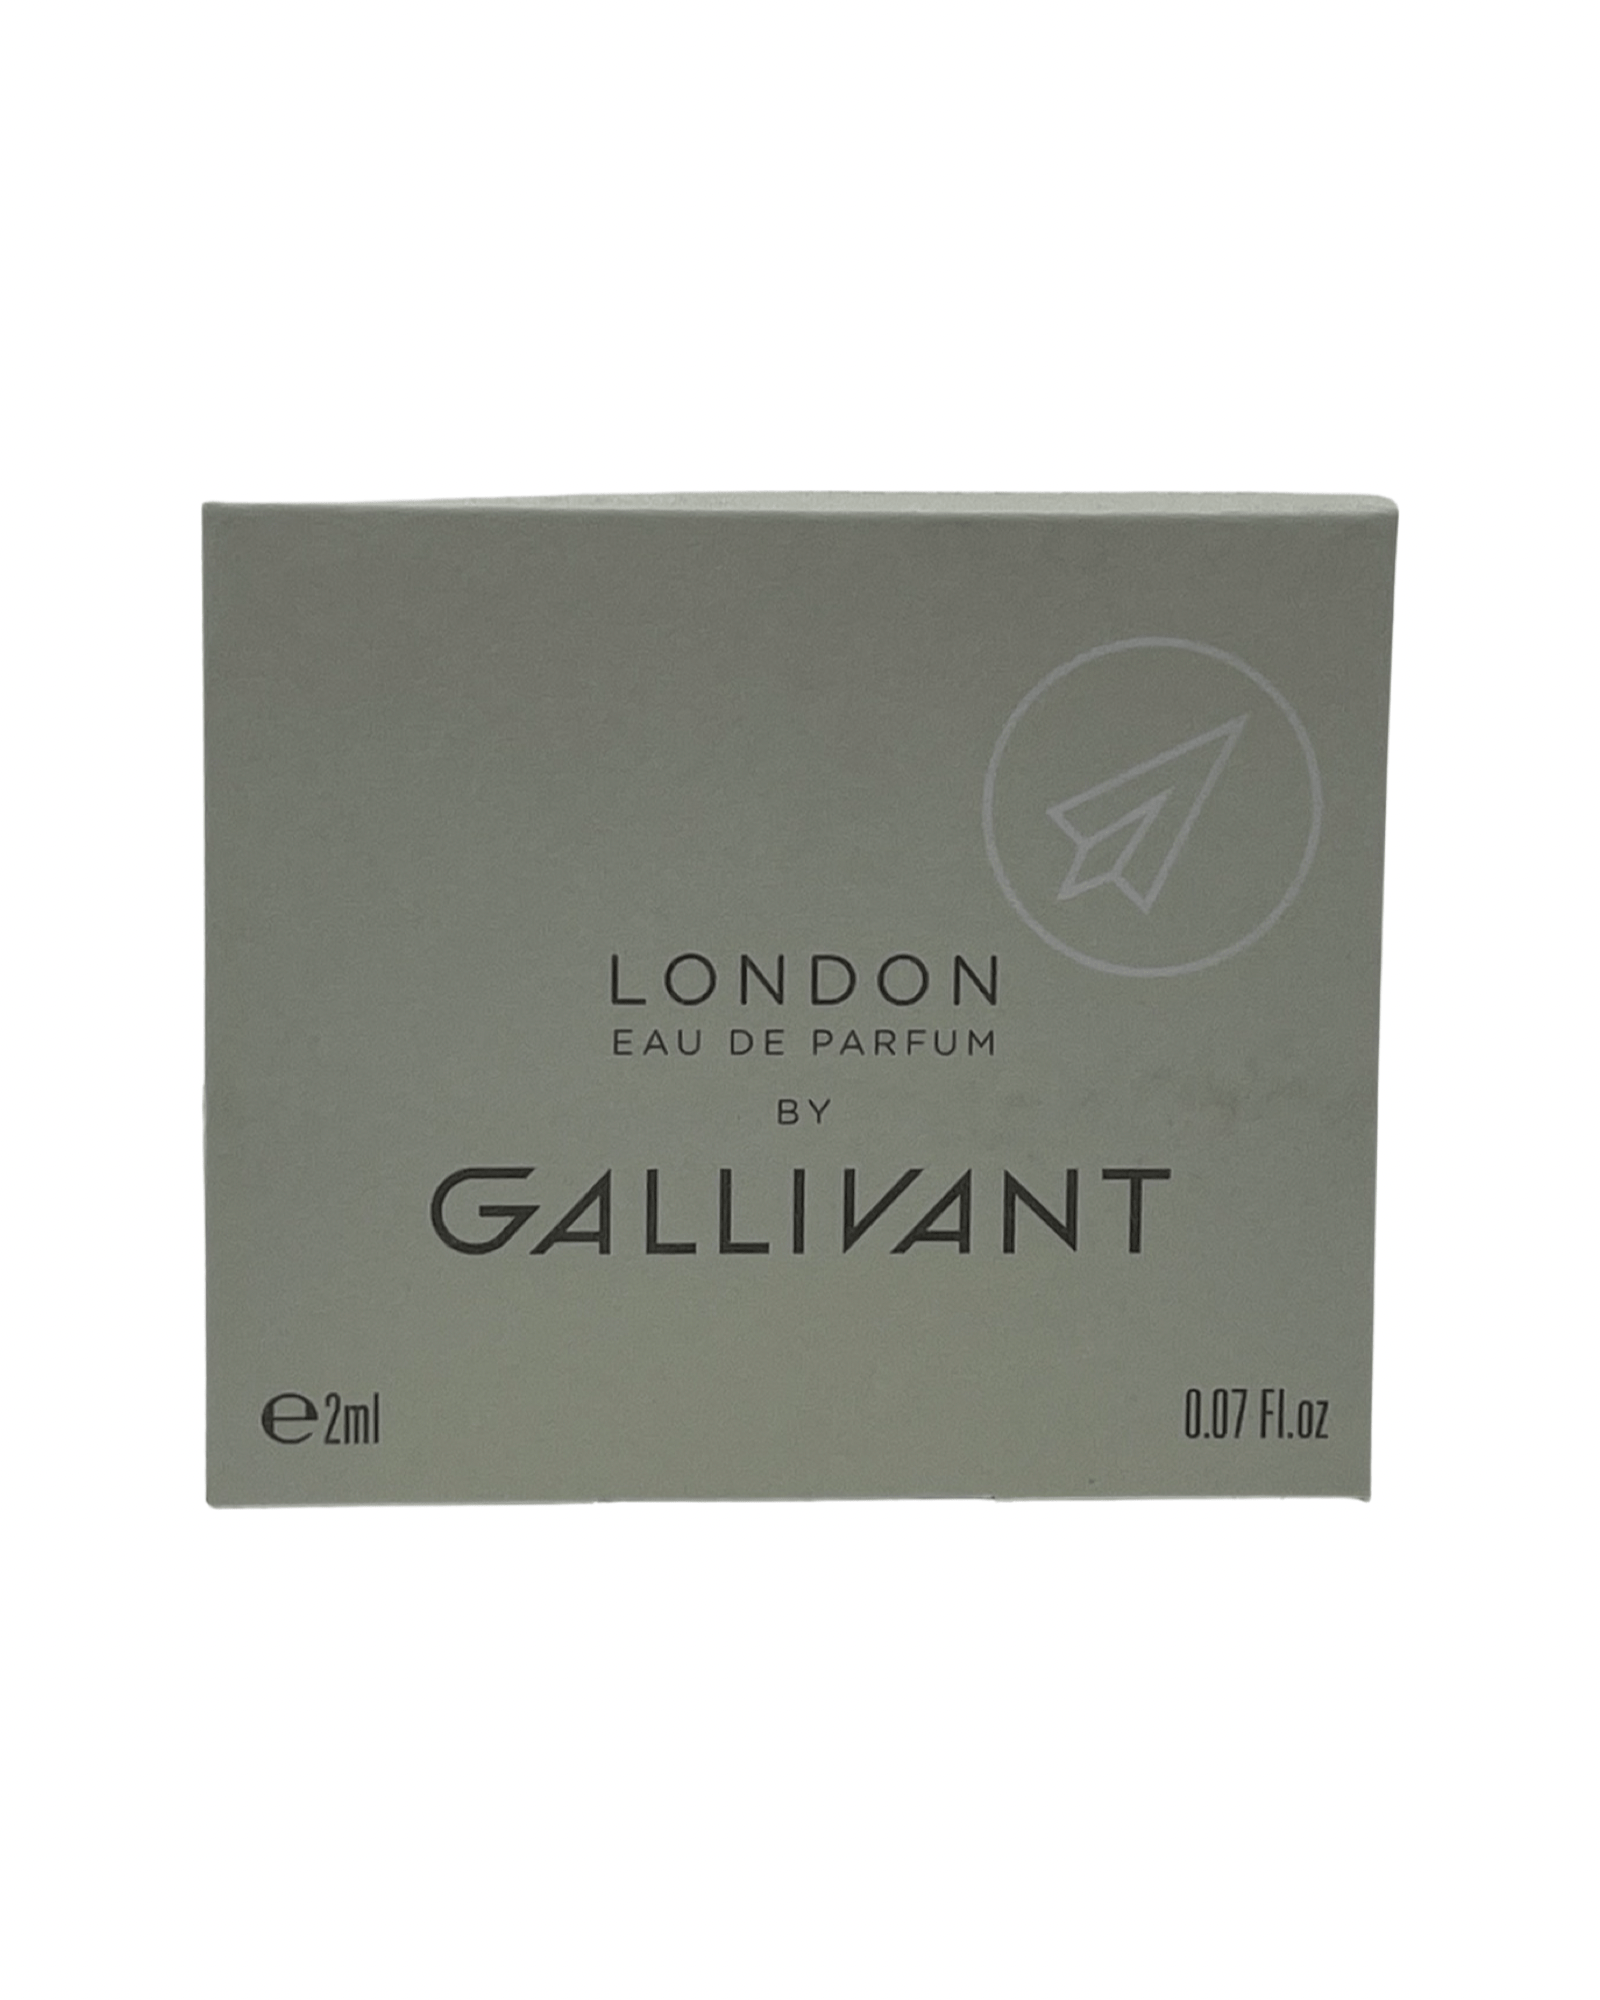 Gallivant - London - 2ml.